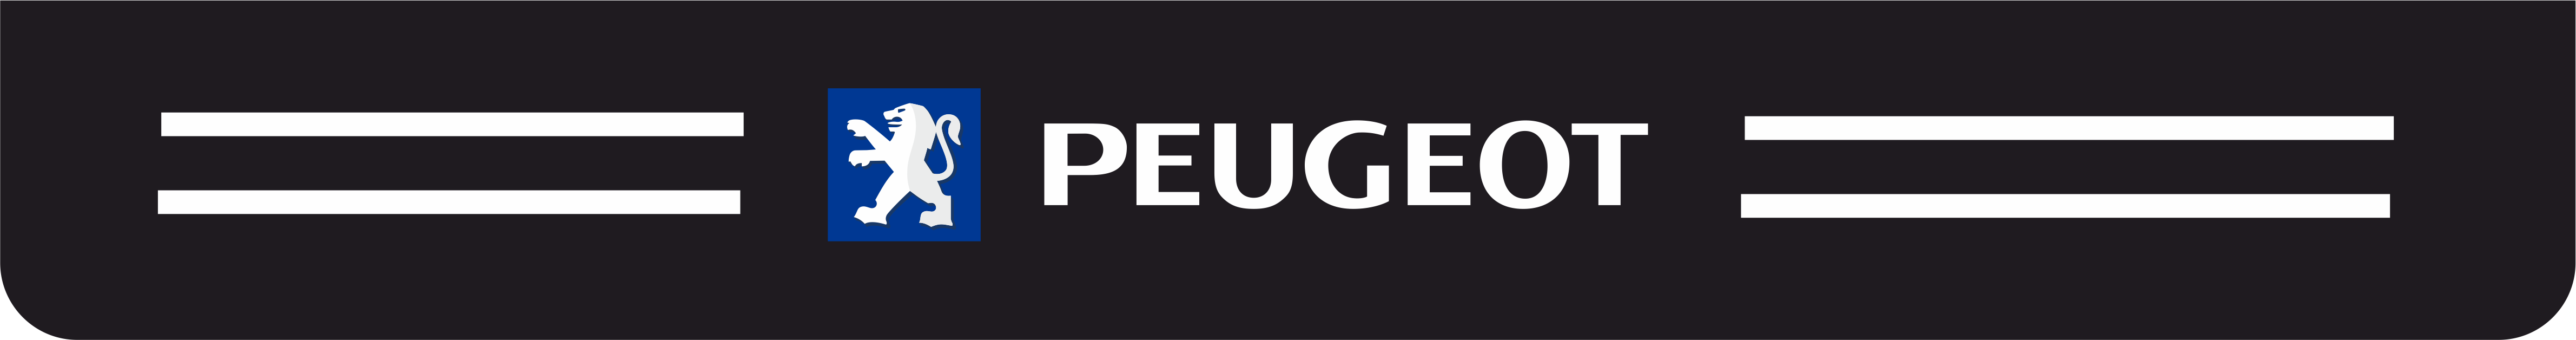 peugeot - Peugeot kapı eşiği sticker